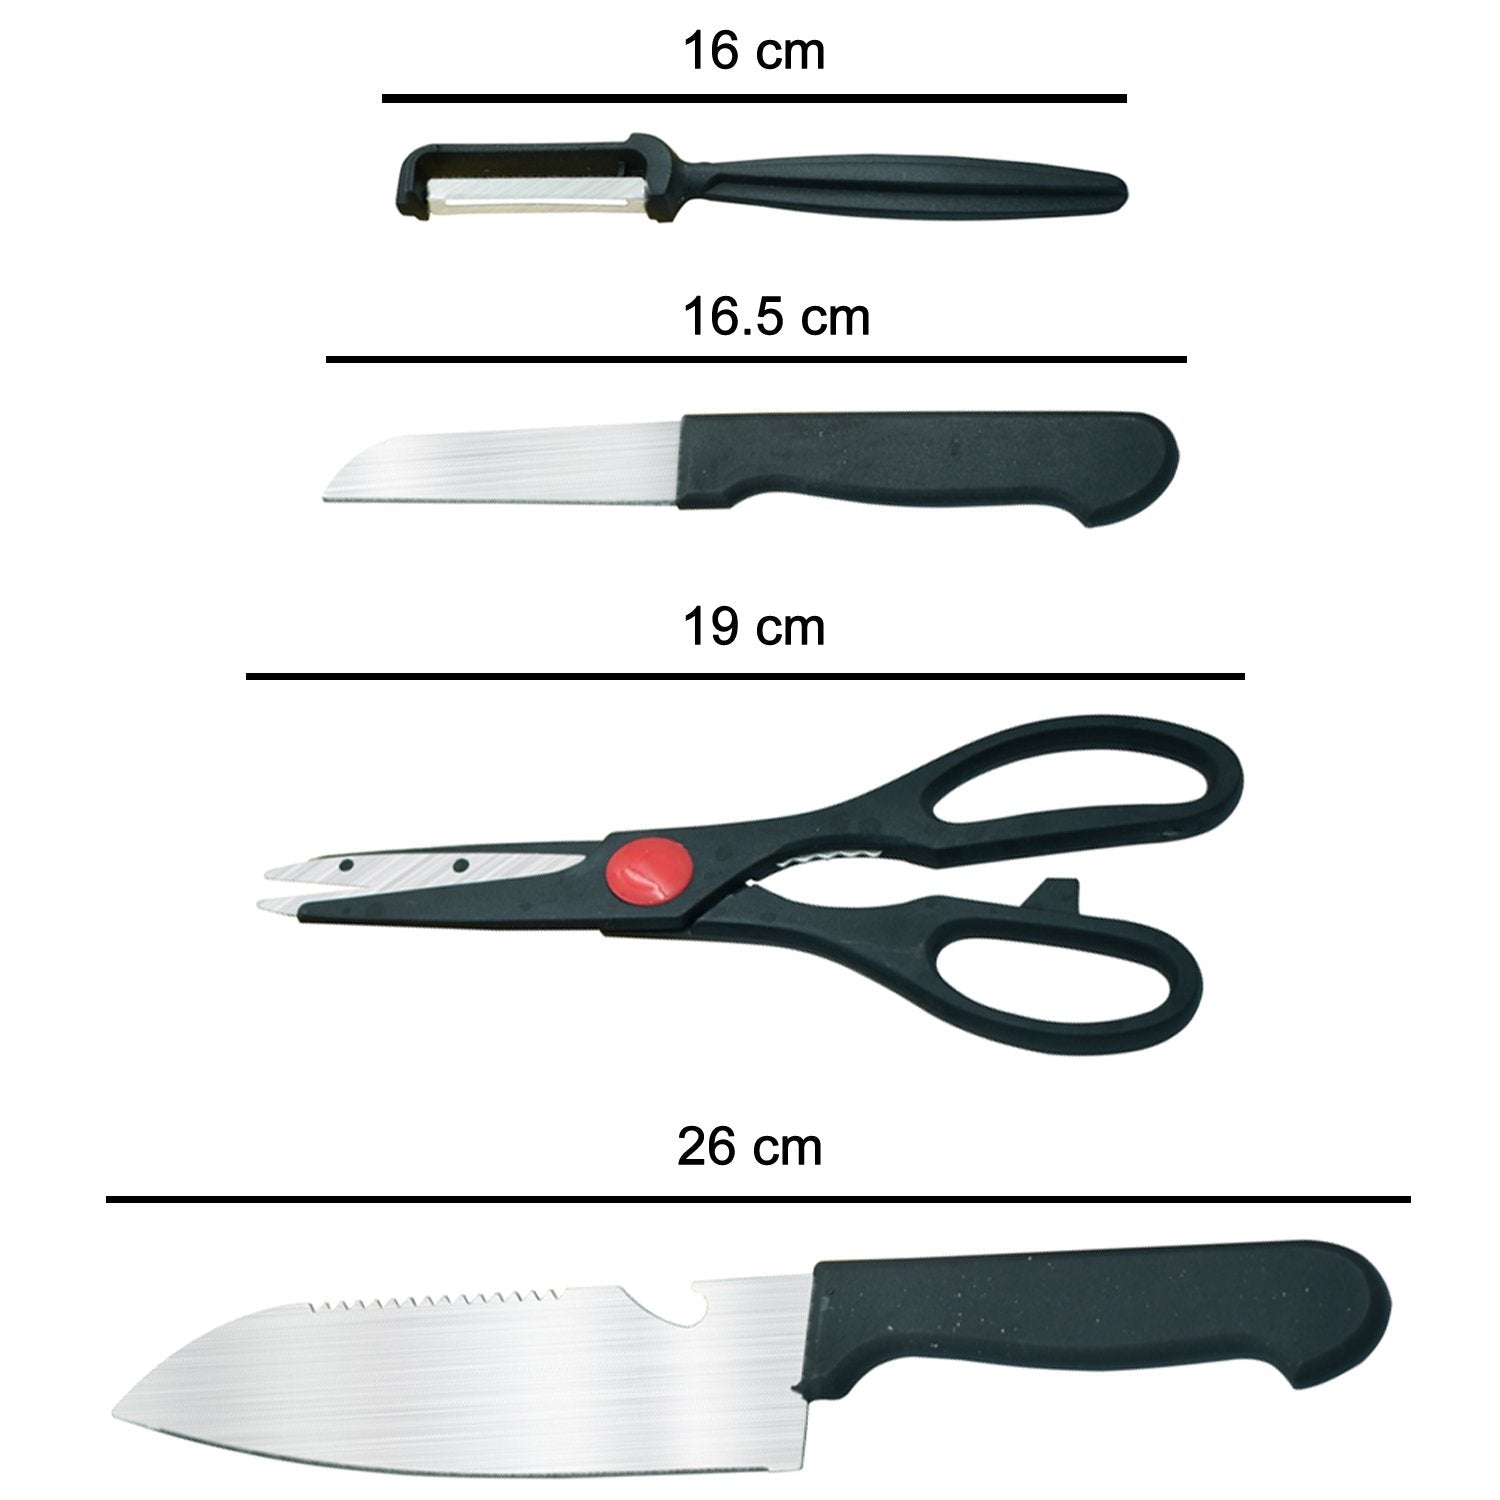 2576 Stainless Kitchen Tool Set (Butcher Knife, Standard Knife, Peeler and Kitchen Scissor) - 4 Pcs DeoDap